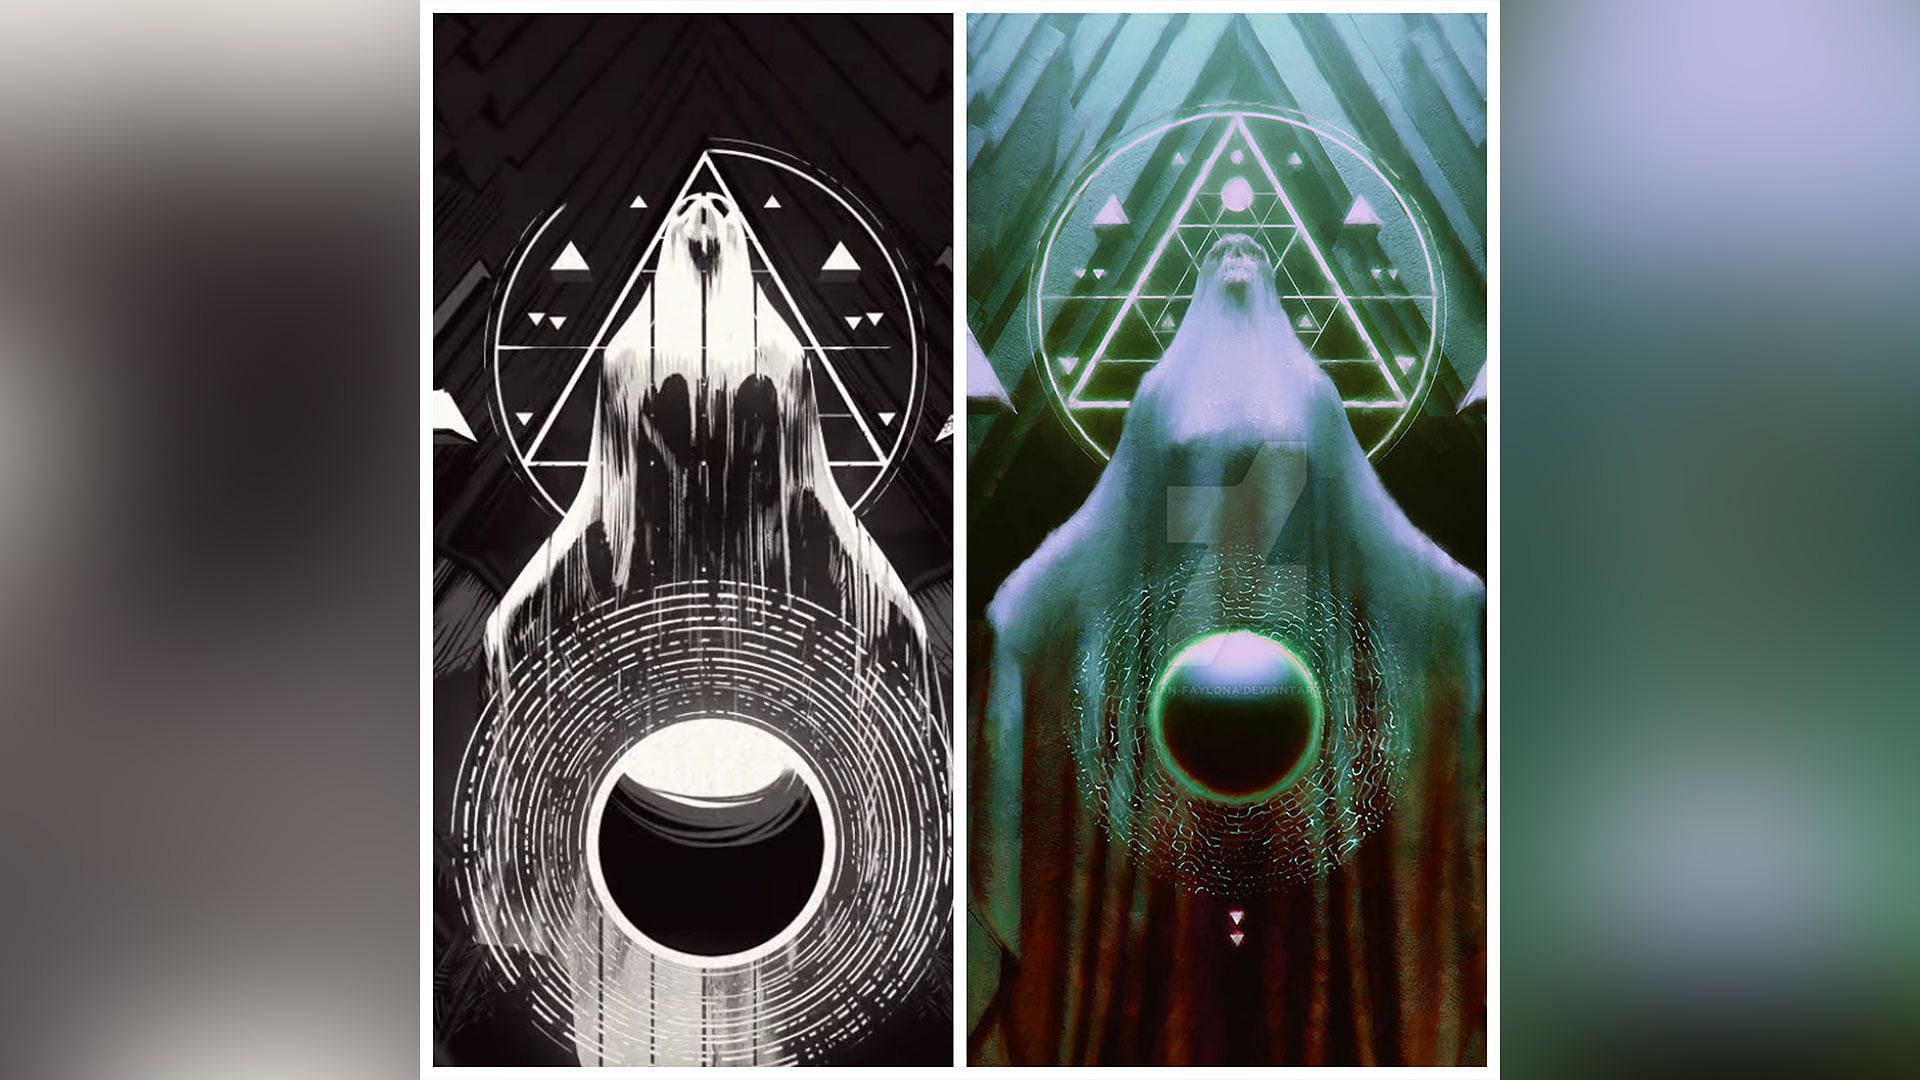 The image seen in the Destiny 2 cutscene (left) vs the image created by the artist (right) (Image via Bungie/Julian Feylona)